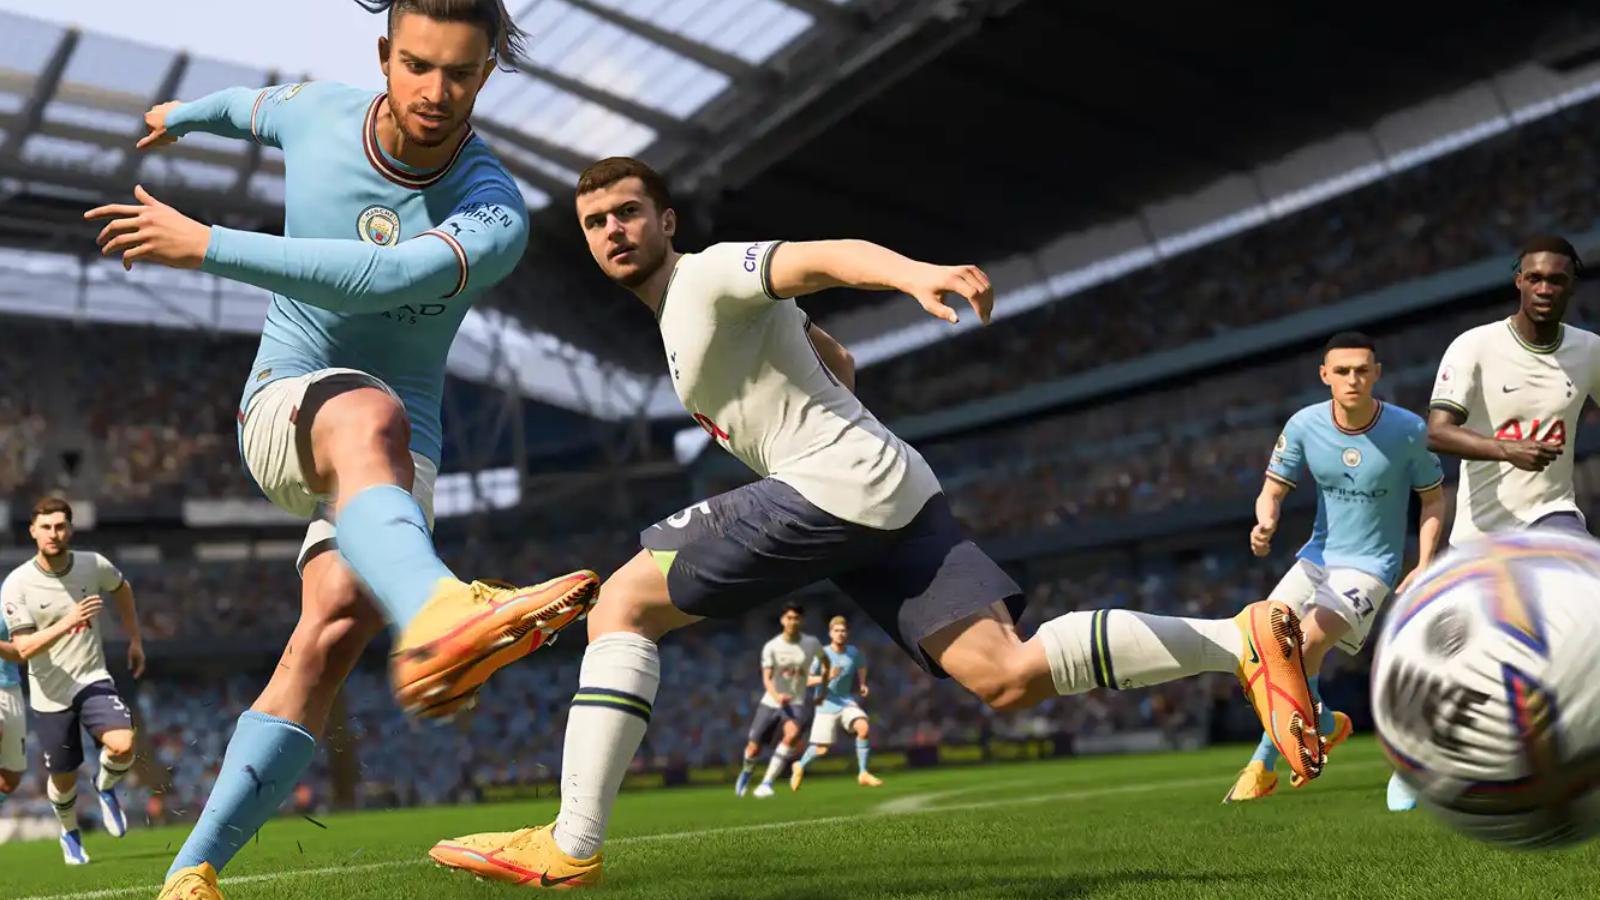 FIFA 23 Community TOTS + TOTS Moments! : r/EASportsFC